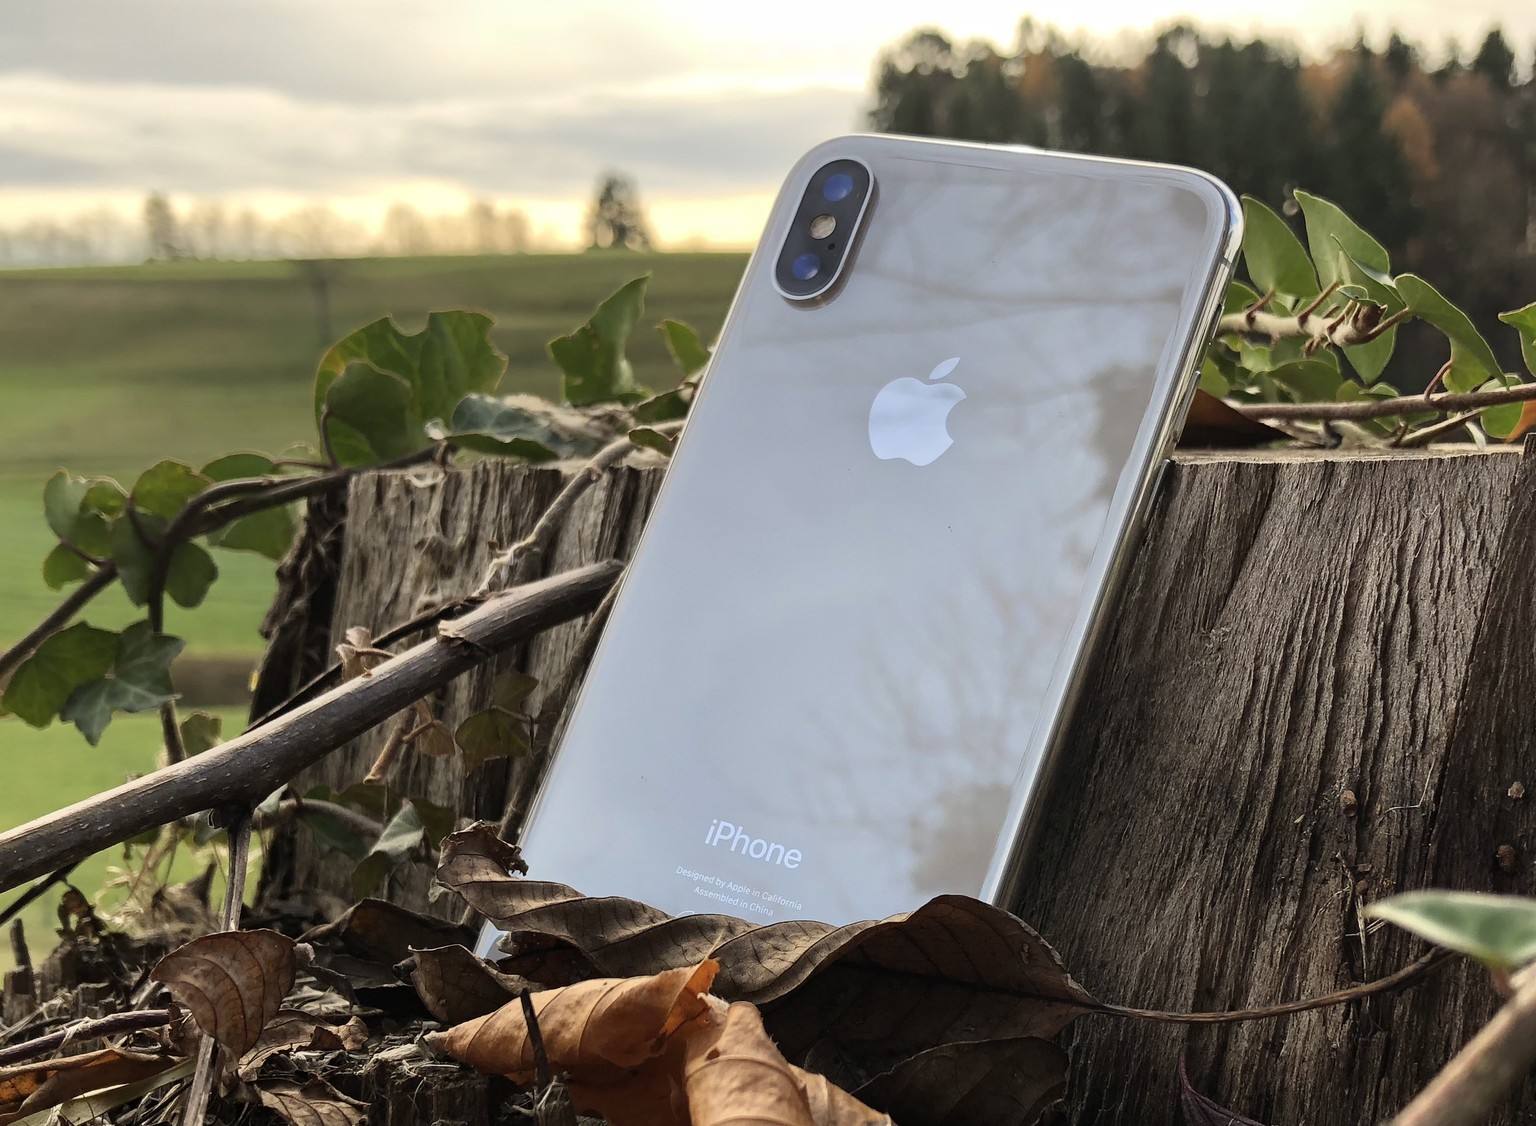 iPhone X, fotografiert mit iPhone 8 Plus. November 2017.